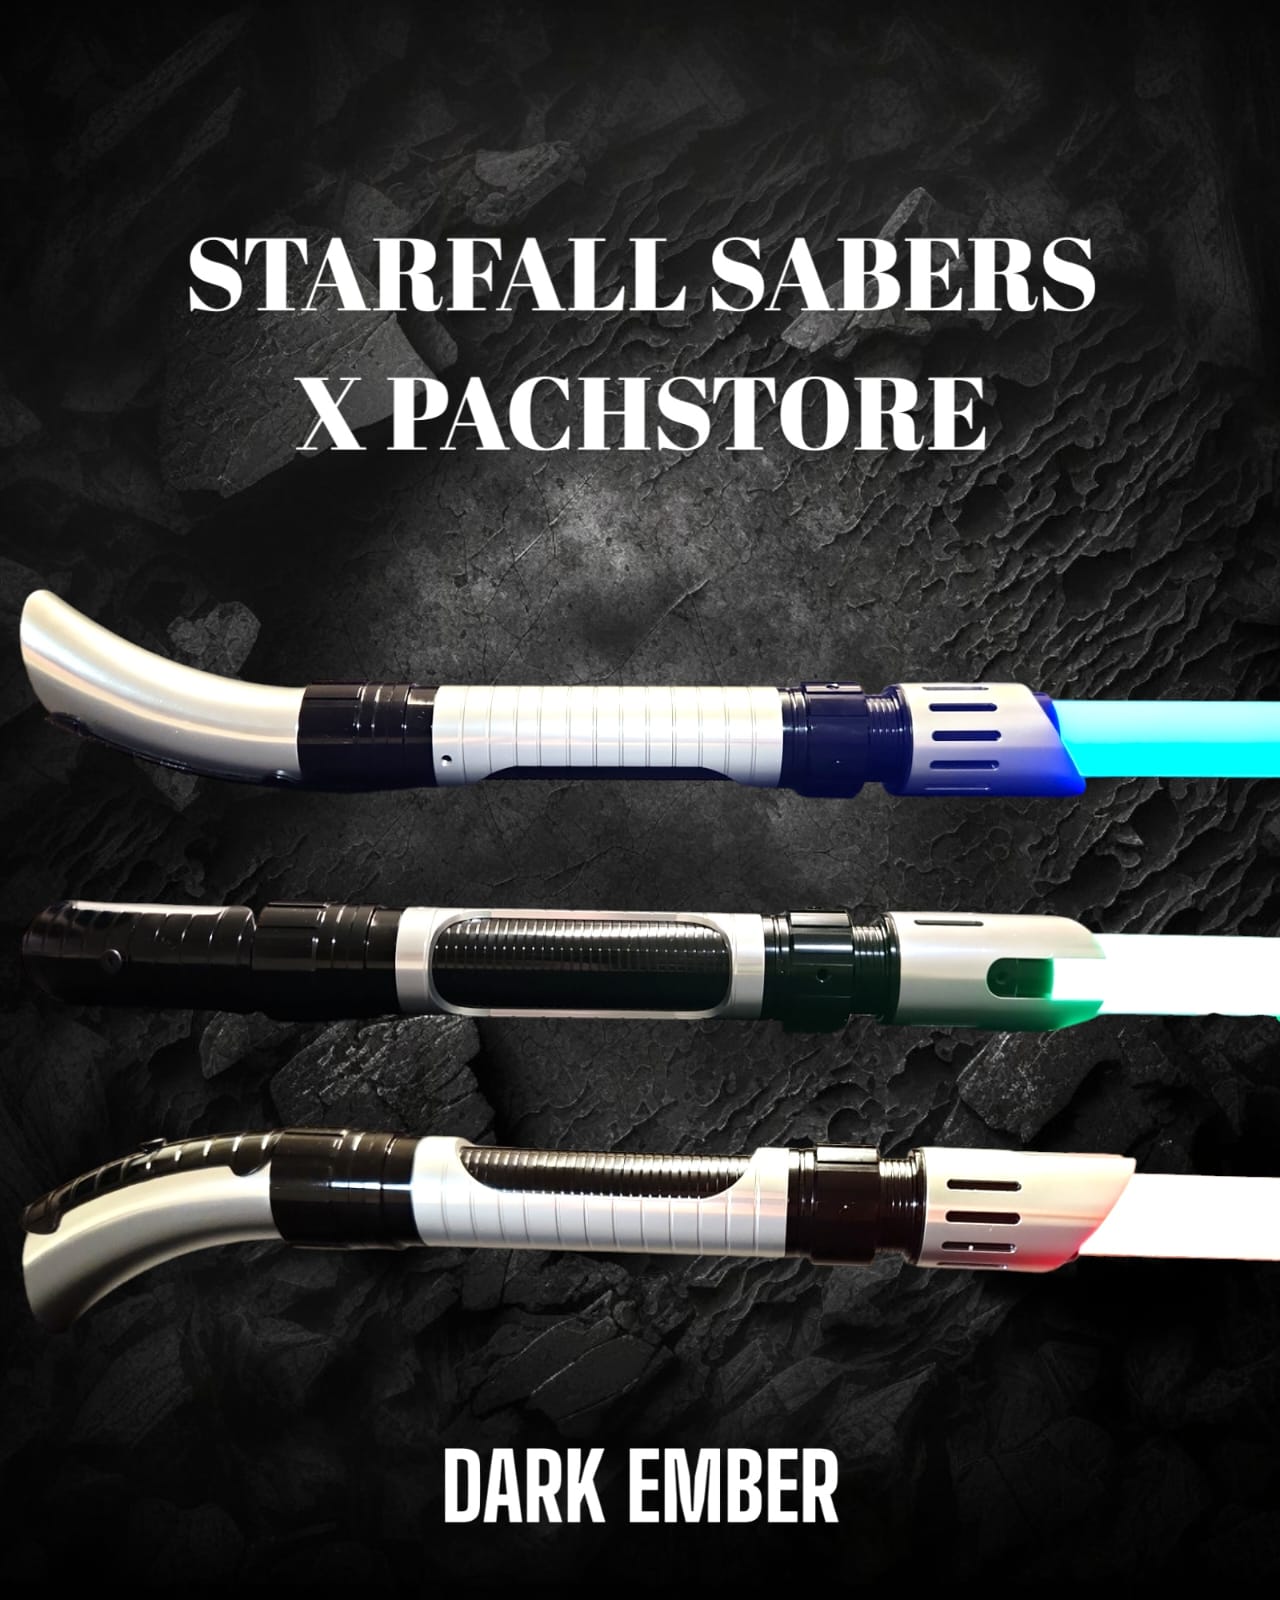 Starfall Sabers lightsaber Dark Ember buy now